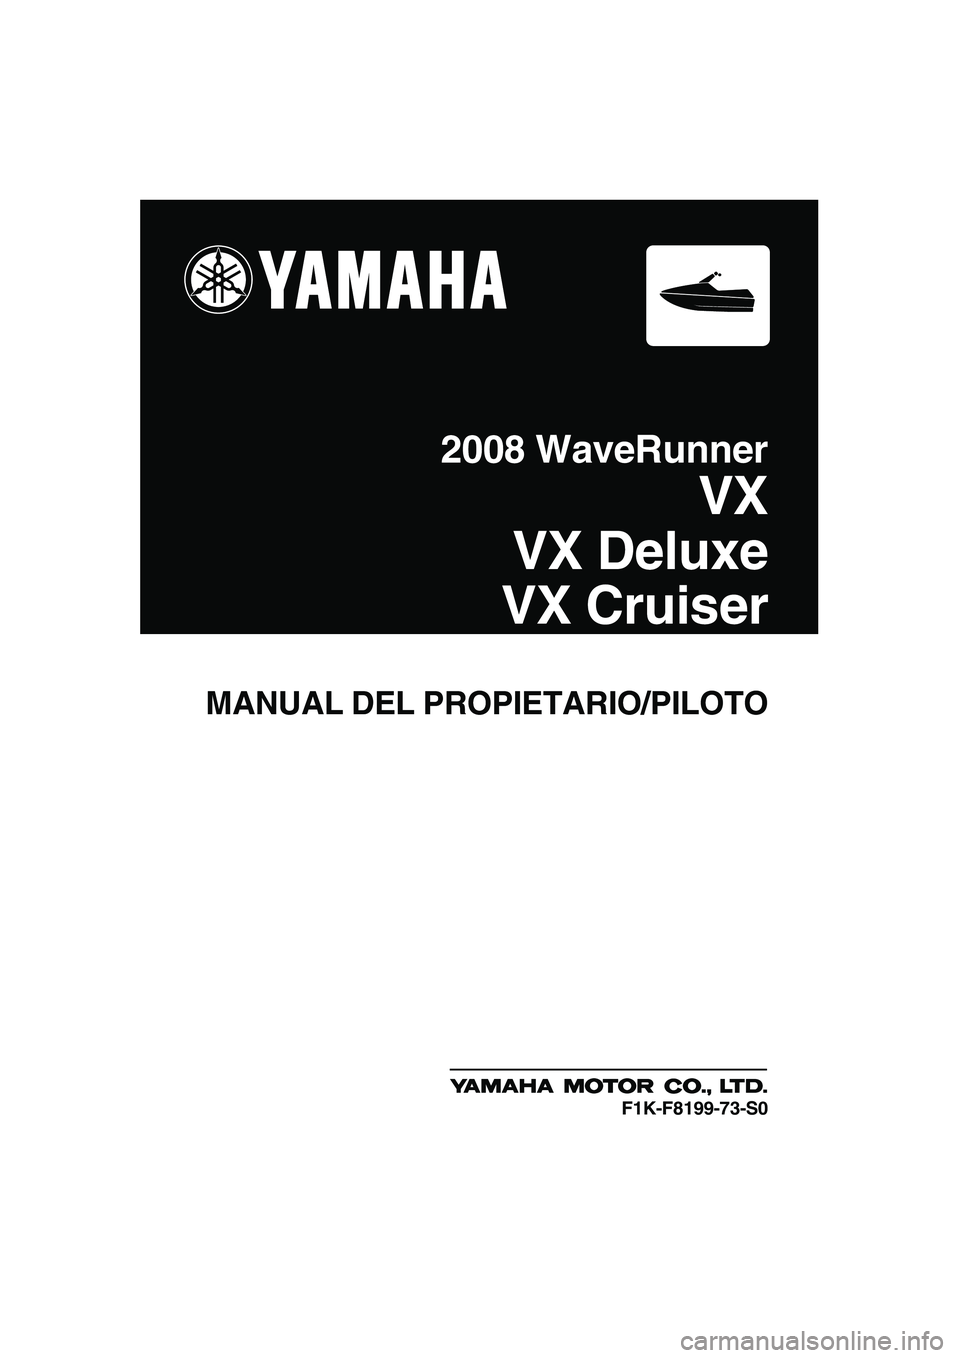 YAMAHA VX 2008  Manuale de Empleo (in Spanish) MANUAL DEL PROPIETARIO/PILOTO
2008 WaveRunner
VX
VX Deluxe
VX Cruiser
F1K-F8199-73-S0
UF1K73S0.book  Page 1  Tuesday, July 10, 2007  9:29 PM 